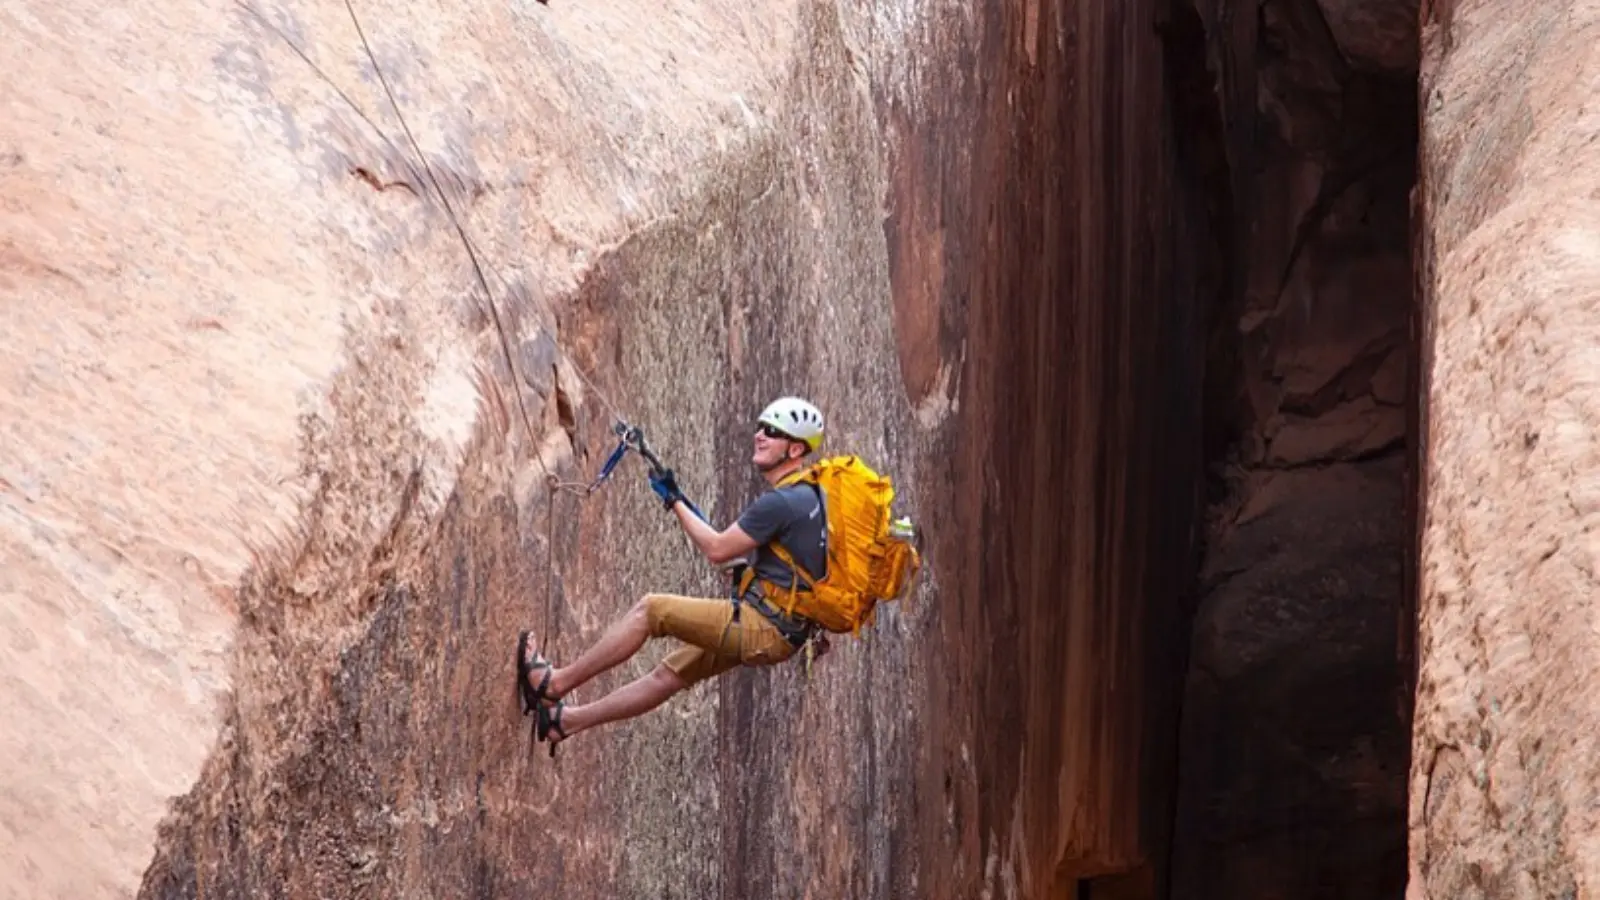 A man canyoneers down a rock wall in a yellow backapck